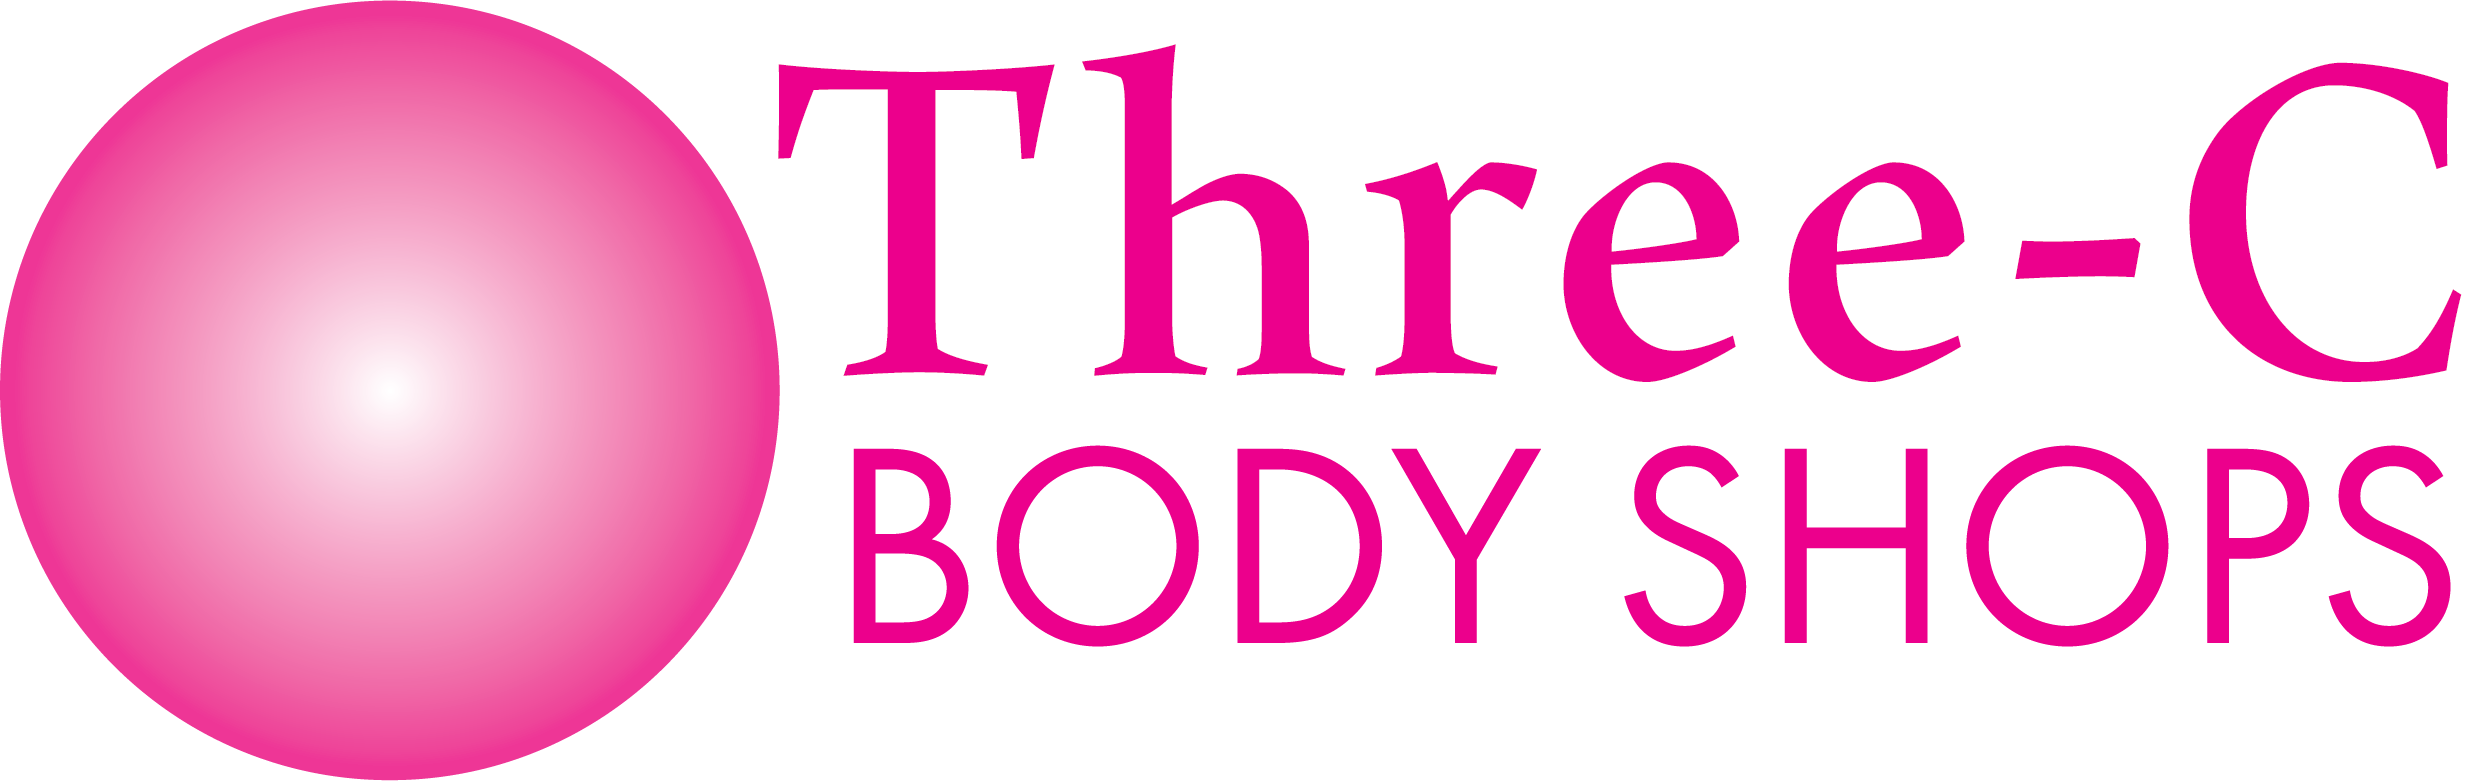 Logo - Three-C BODY SHOPS